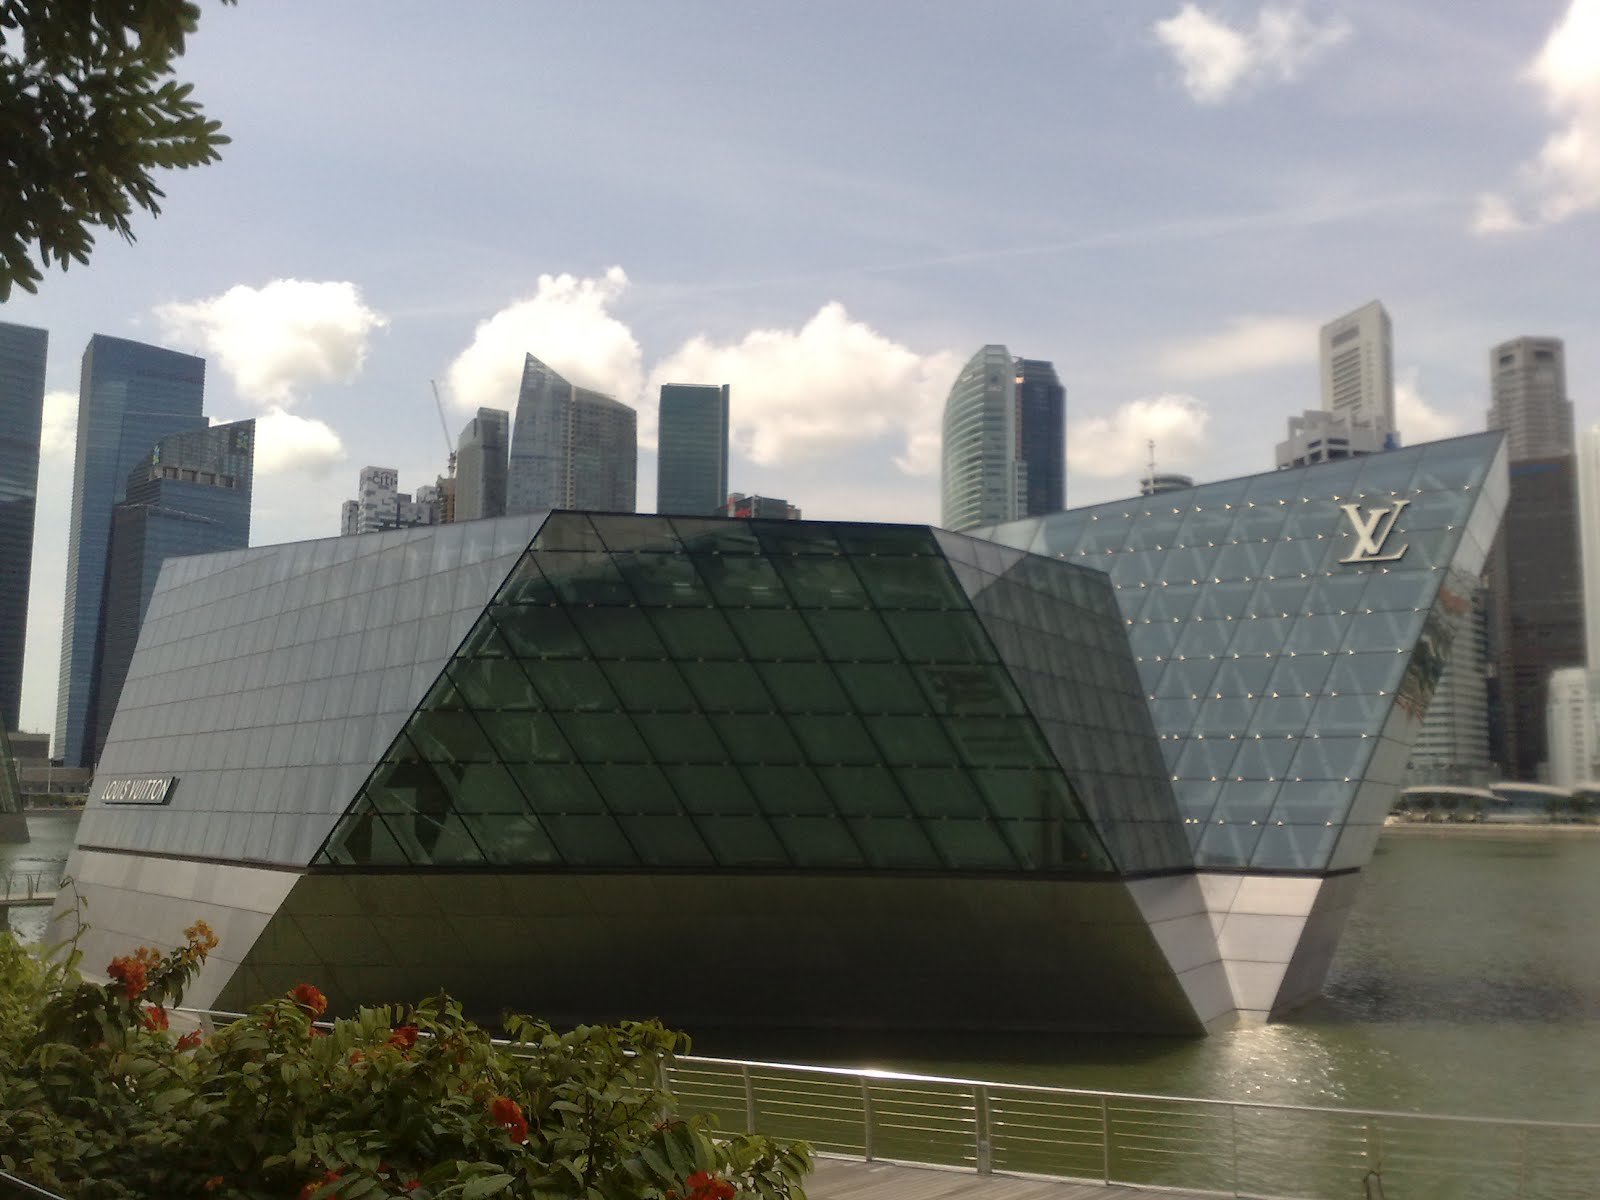 Louis Vuitton Island Maison at Marina Bay Sands, Singapore